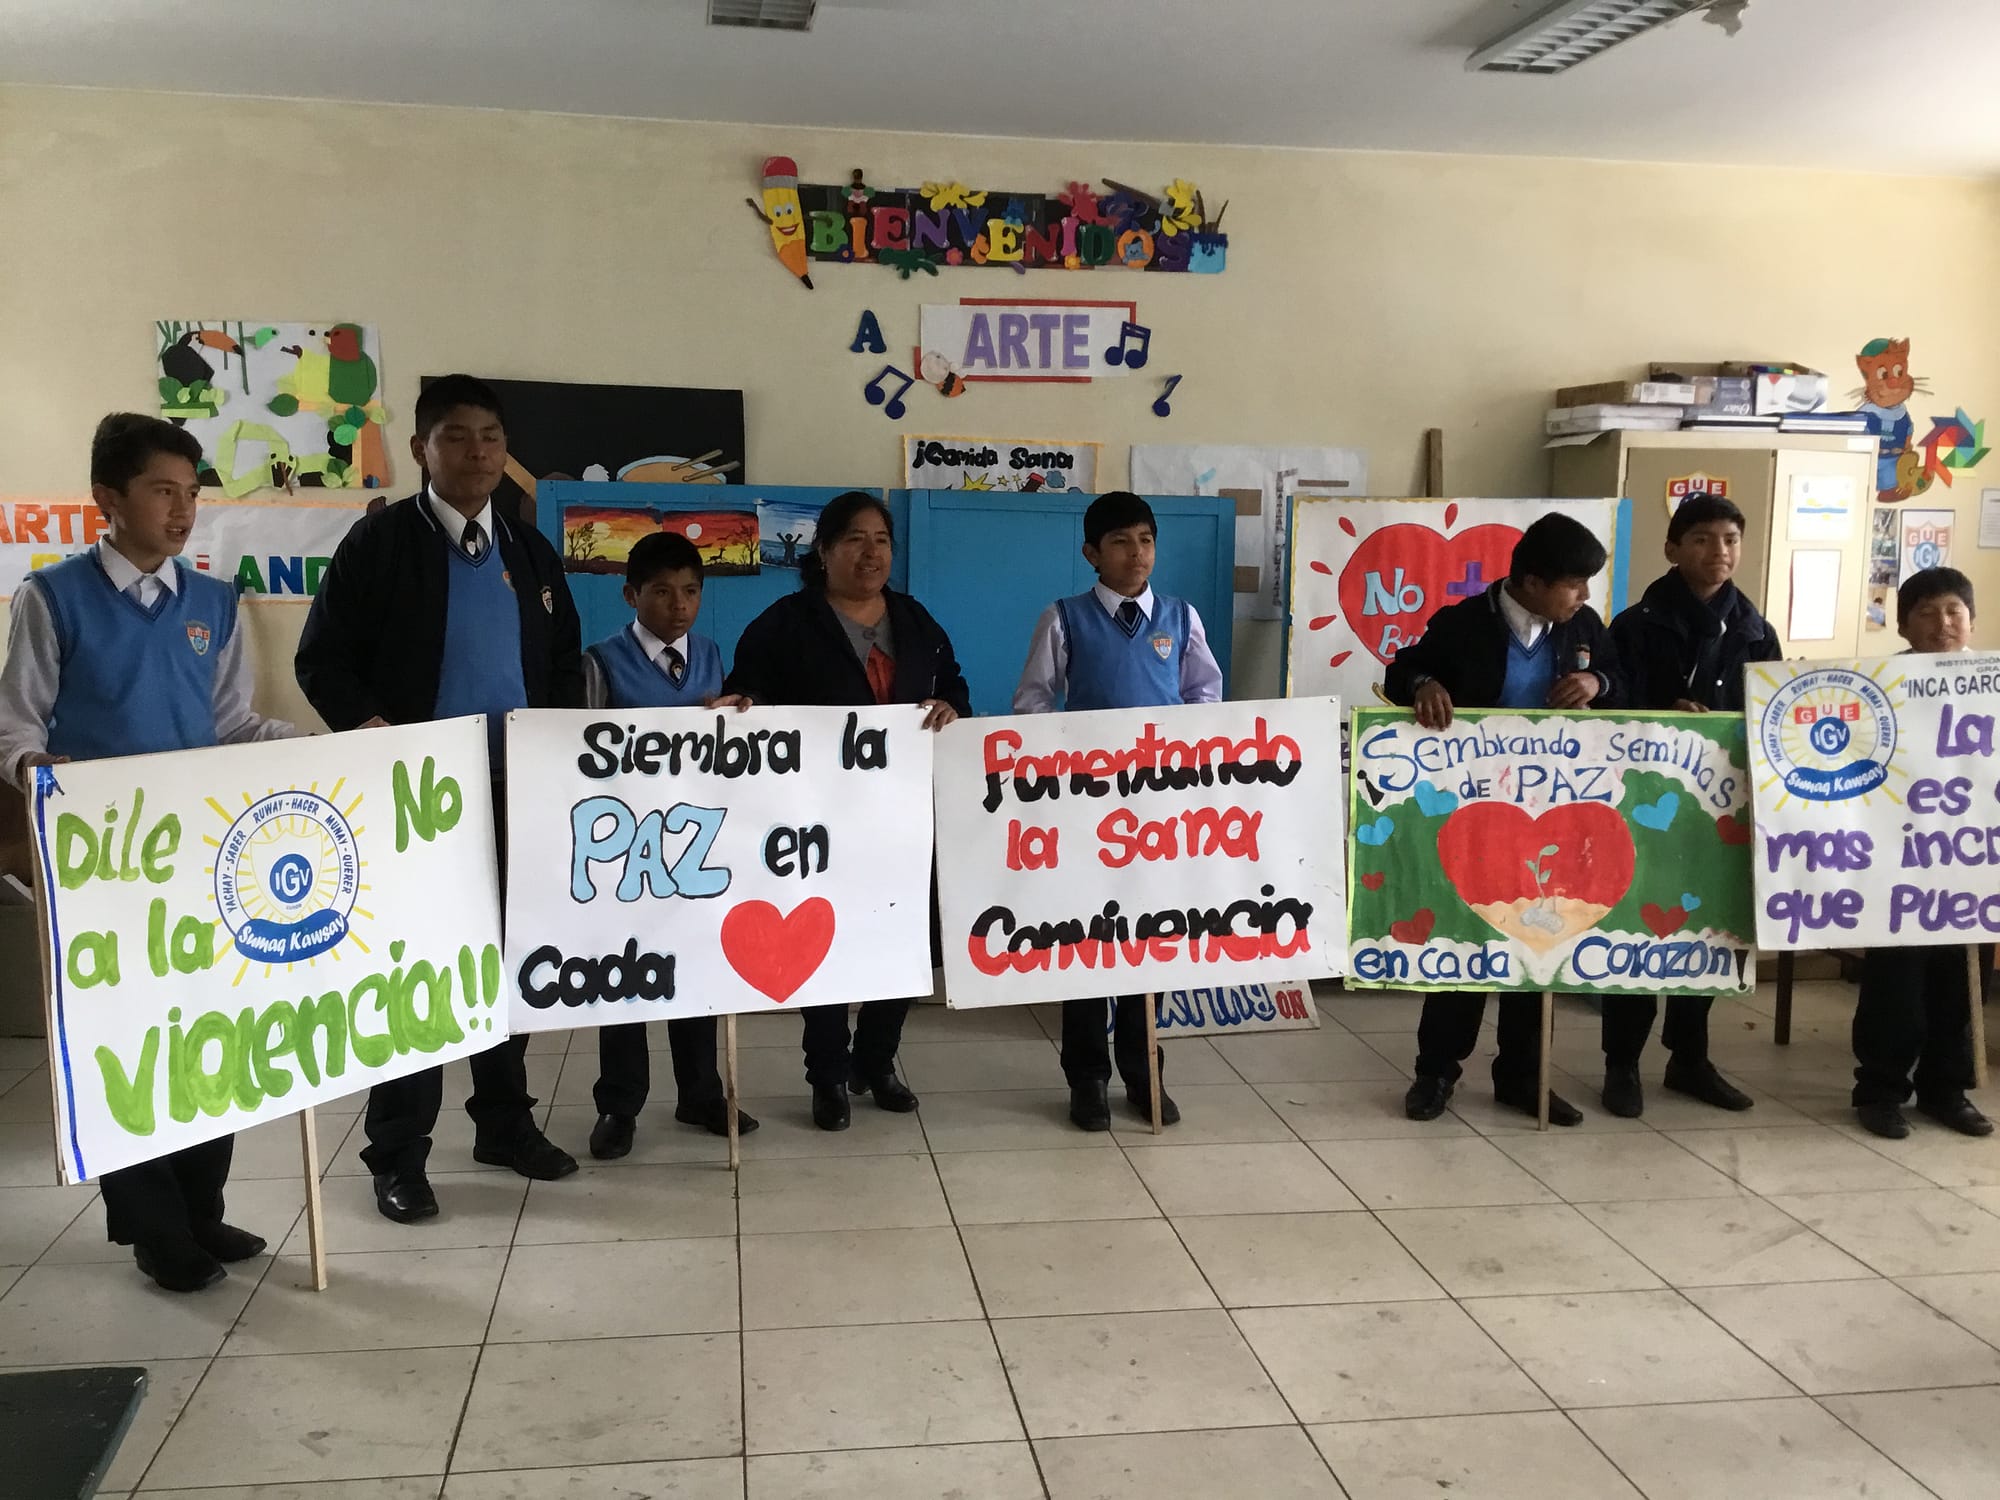 Fallstudie: Friedens-Bildungs-Programm fördert Friedenskultur in peruanischen Schulen